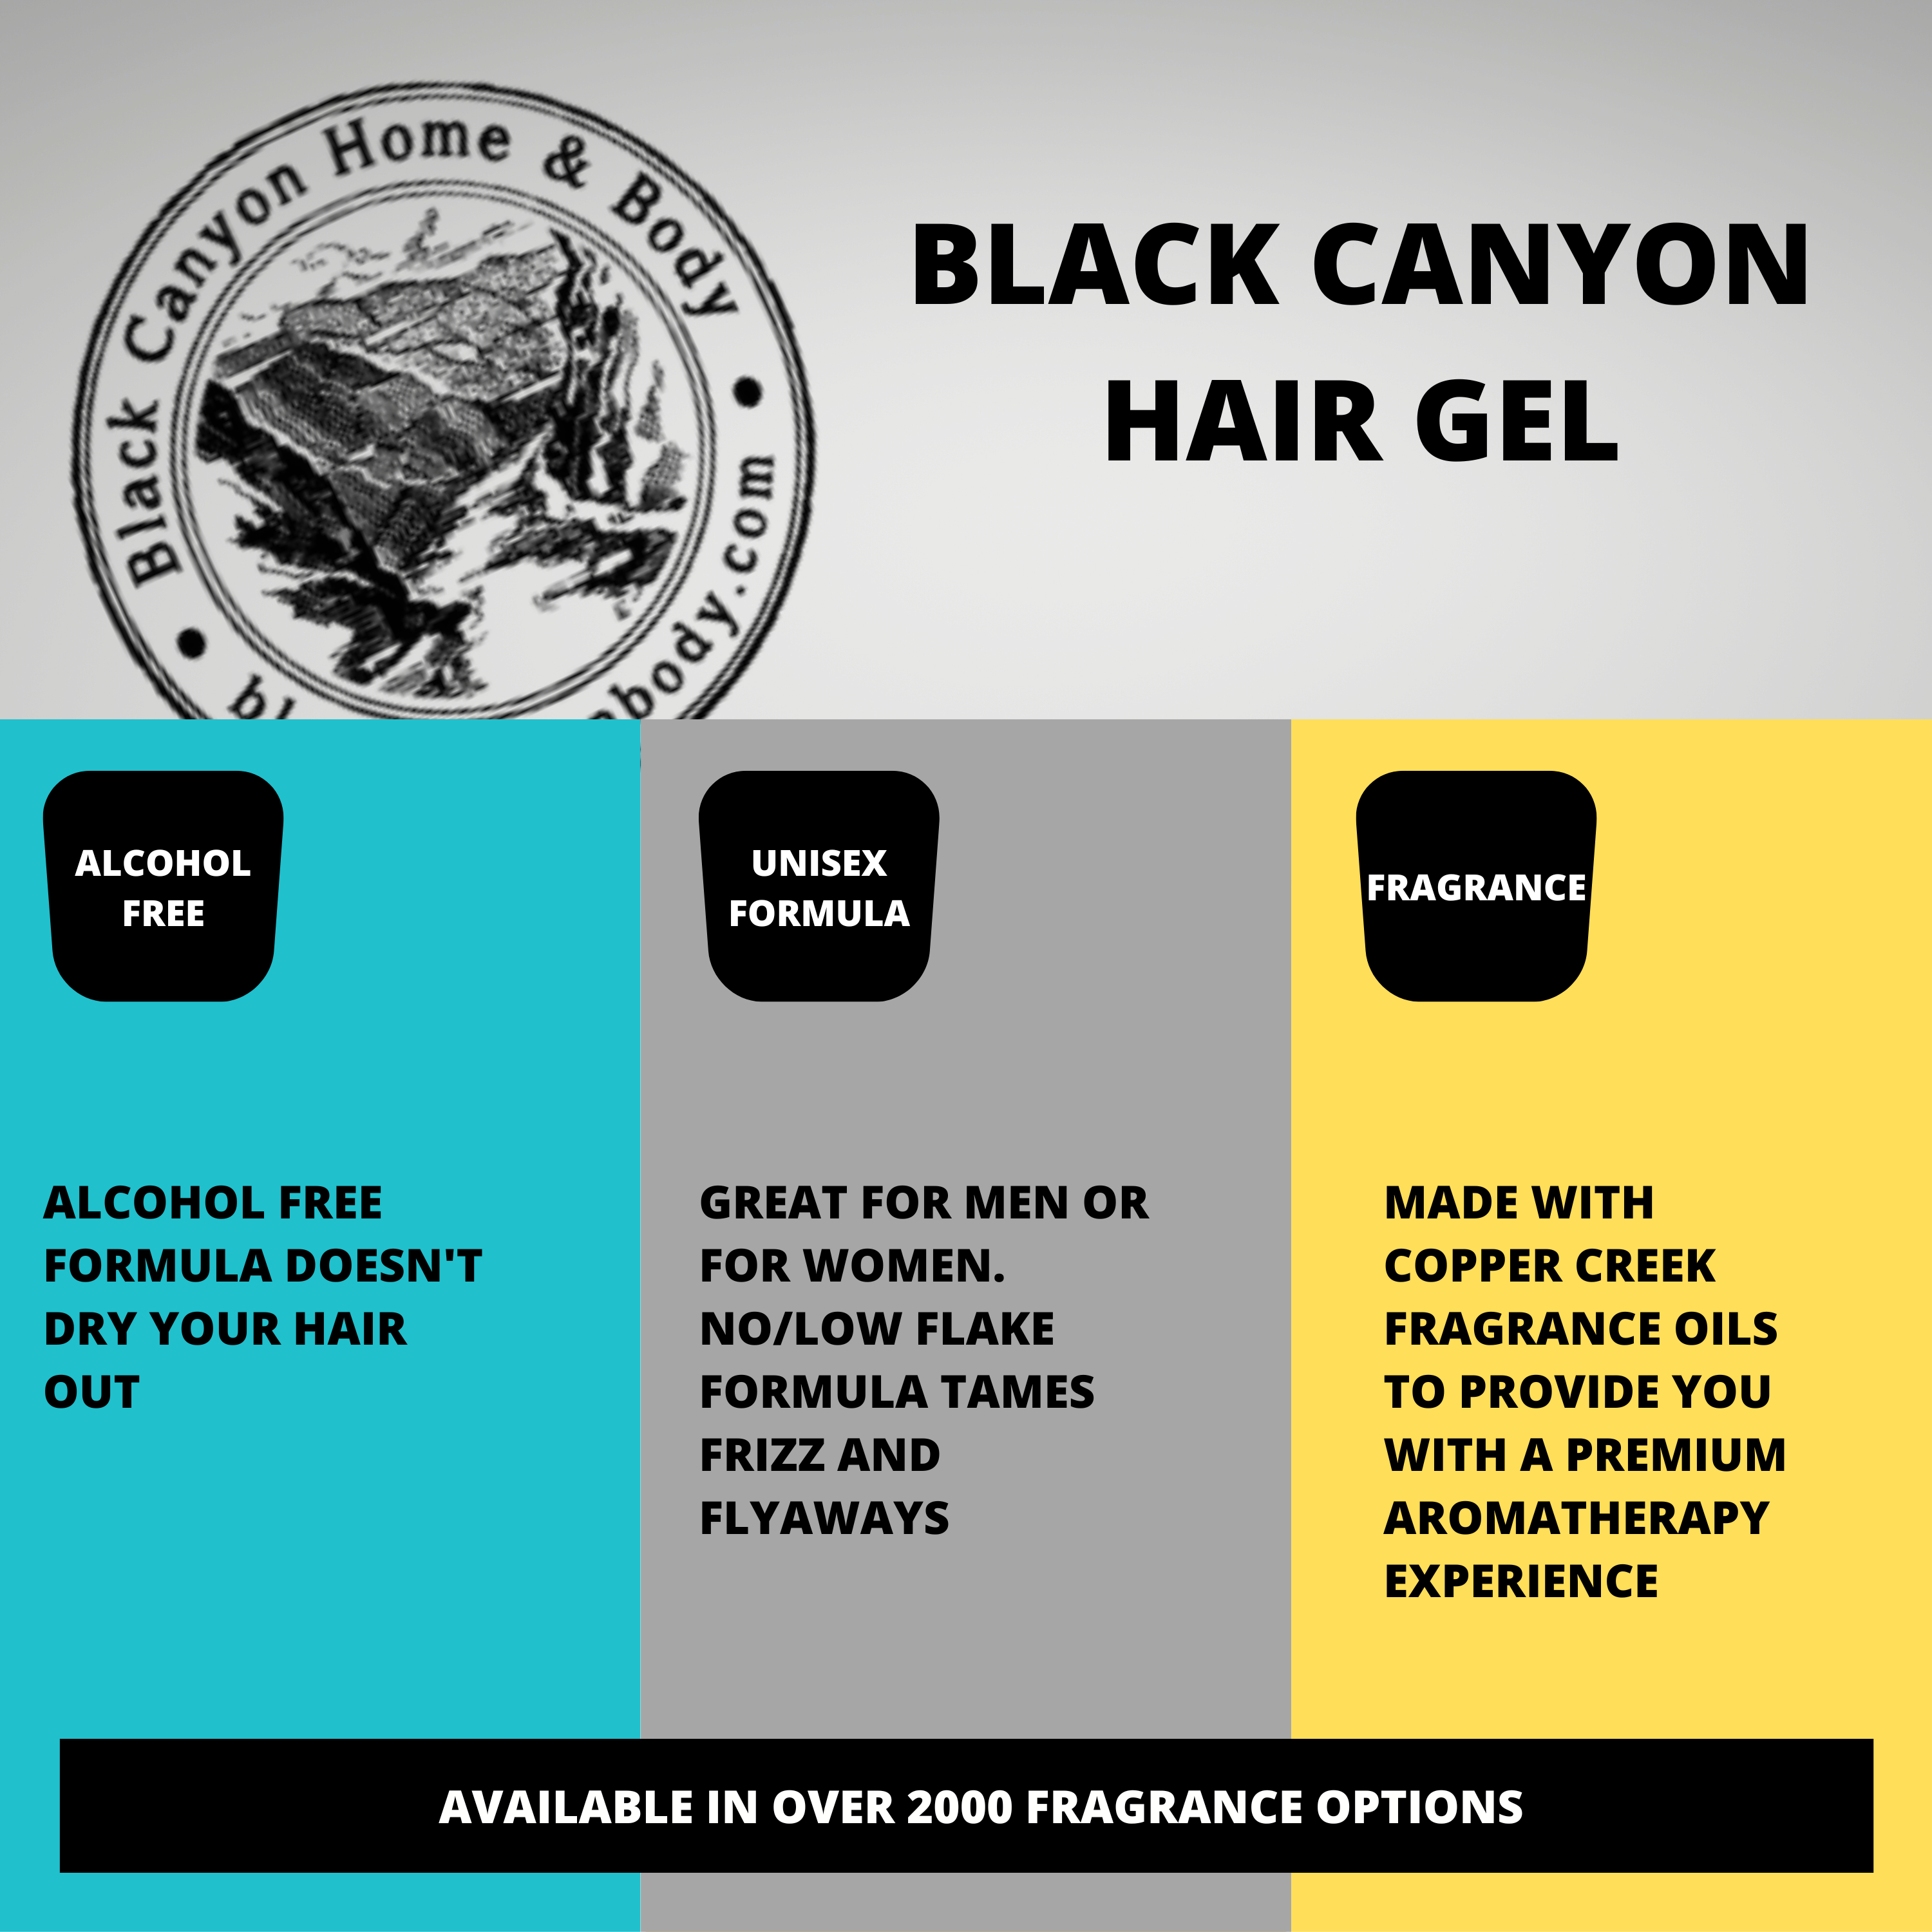 Black Canyon Black Currant Vanilla Scented Hair Gel